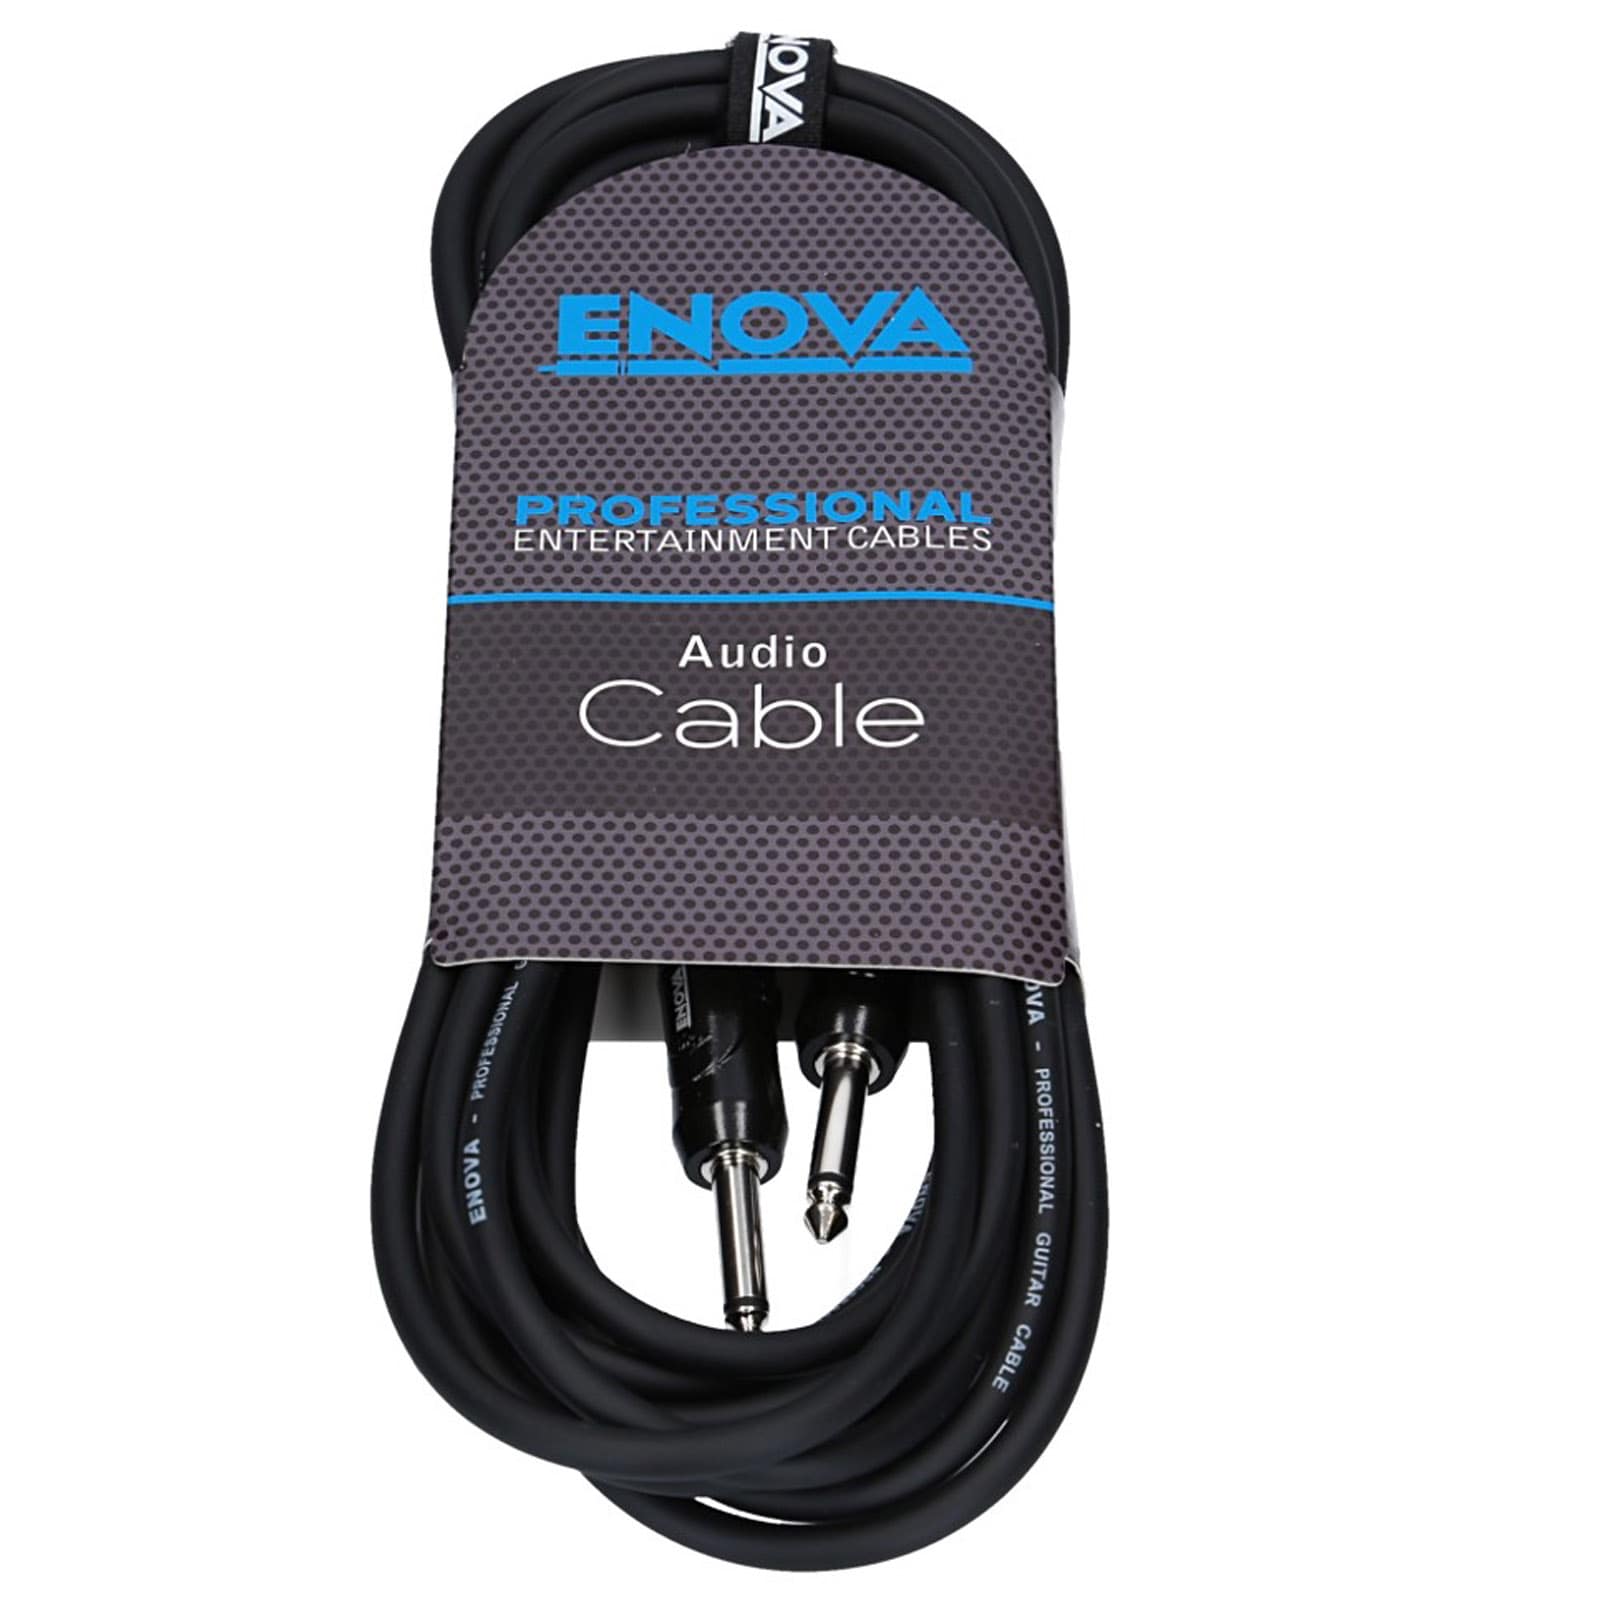 ENOVA Mono Jack Cable PLMM2-Serie 30 Meters Instrument Cable